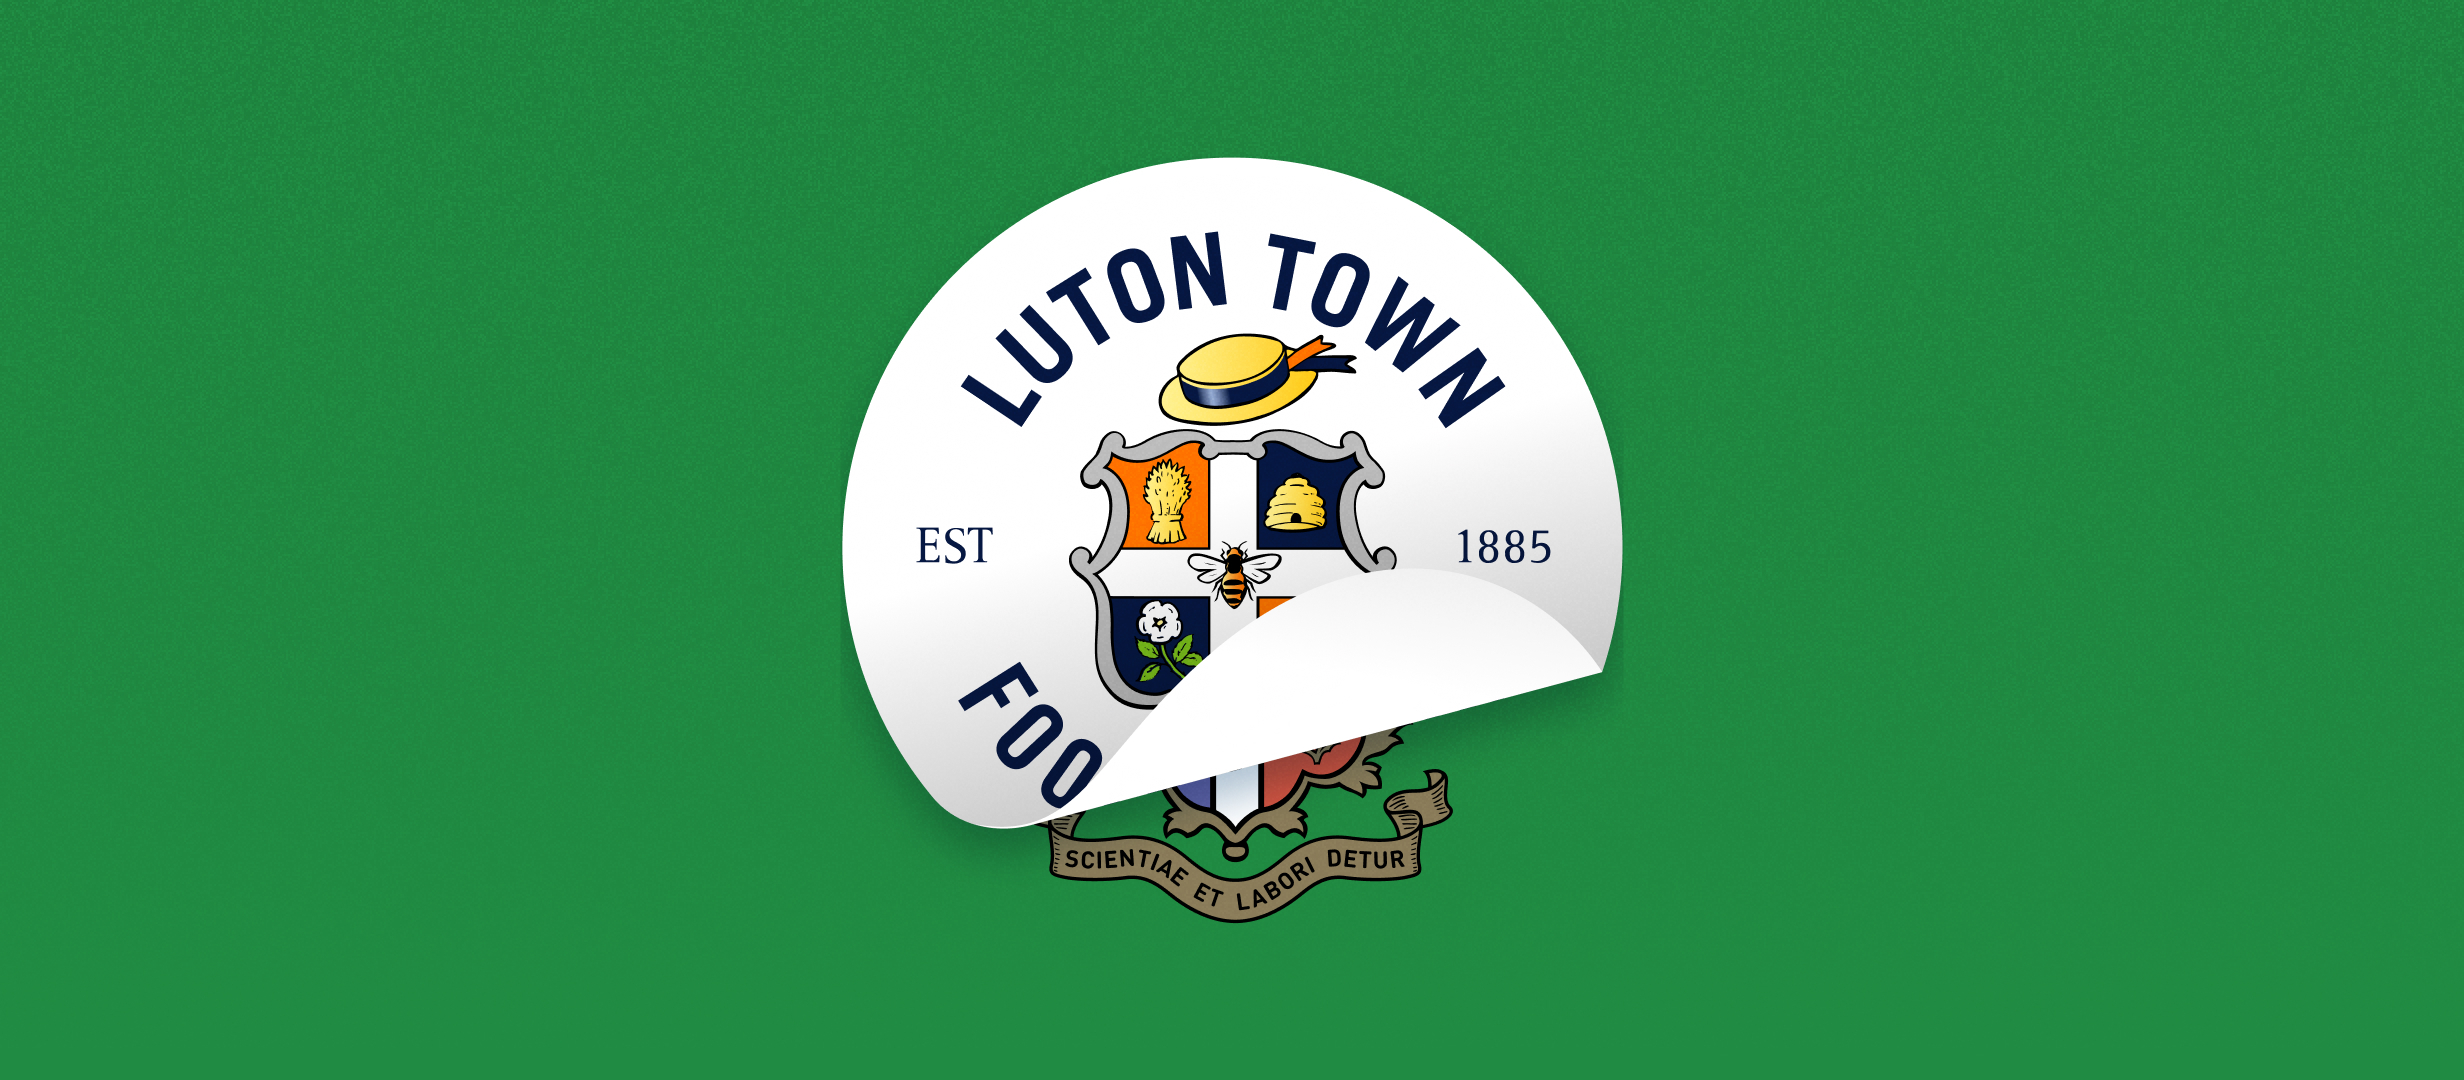 Luton Town take a punt at the Premier League